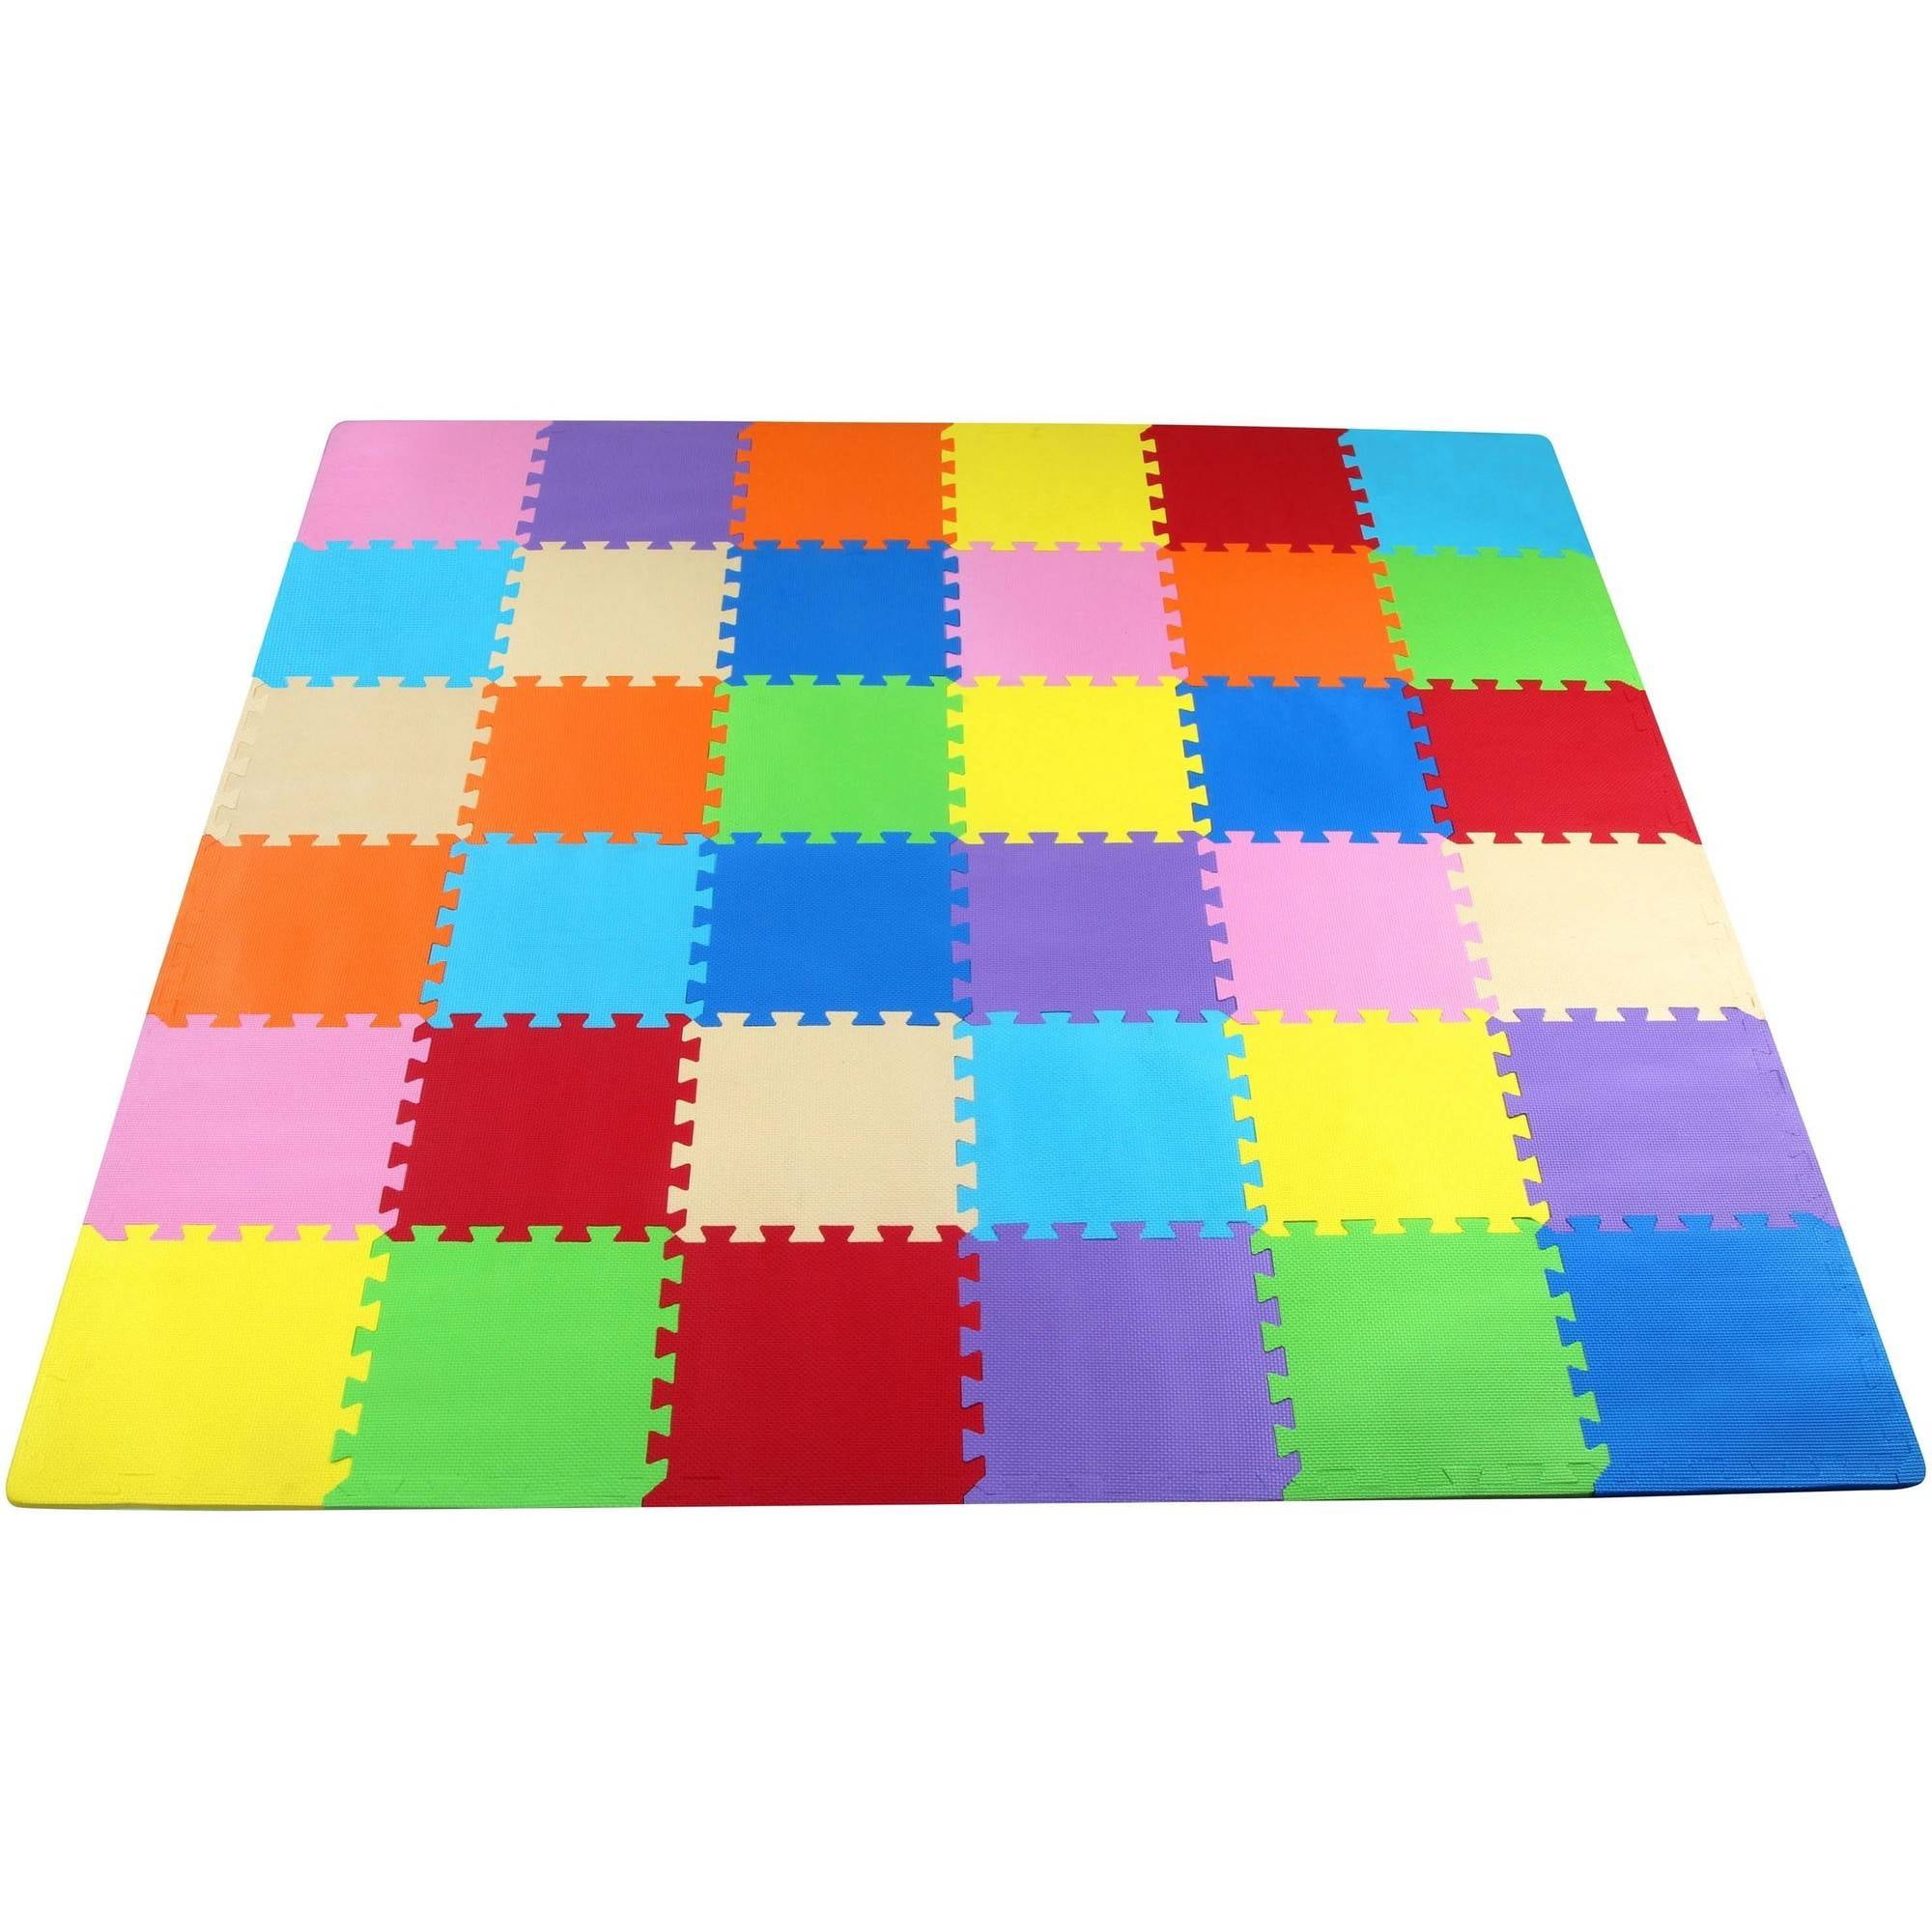 High Quality Interlocking EVA Soft Foam Kids Play Mats Tiles Set Multicolour New 